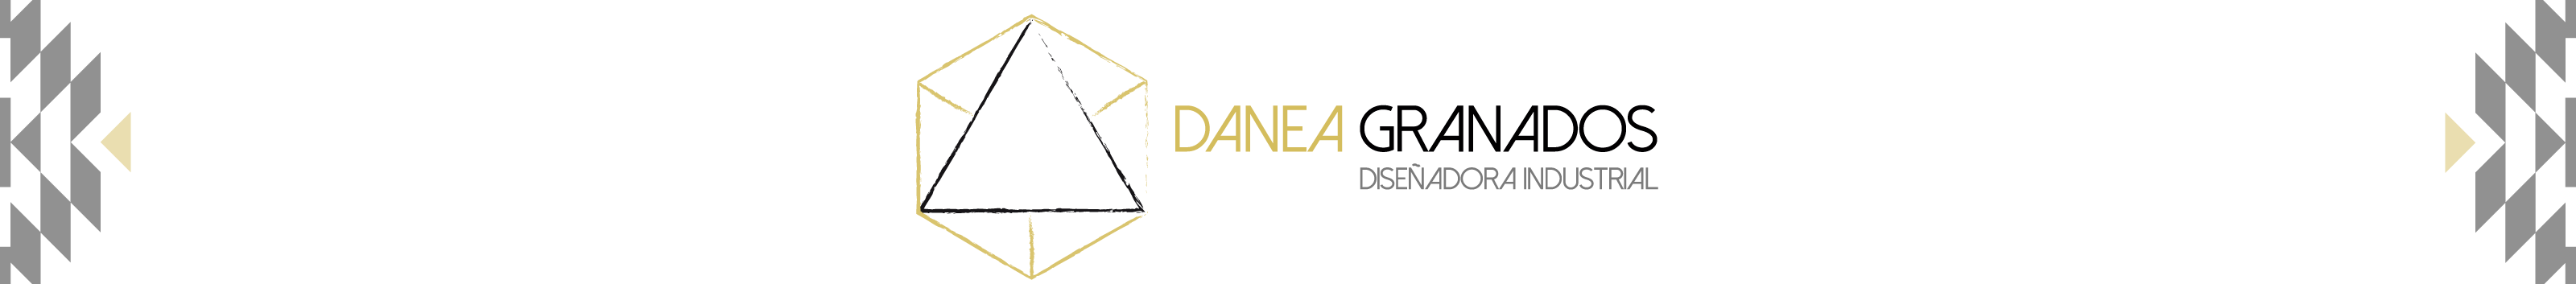 Bannière de profil de Circe Danea Granados Briones